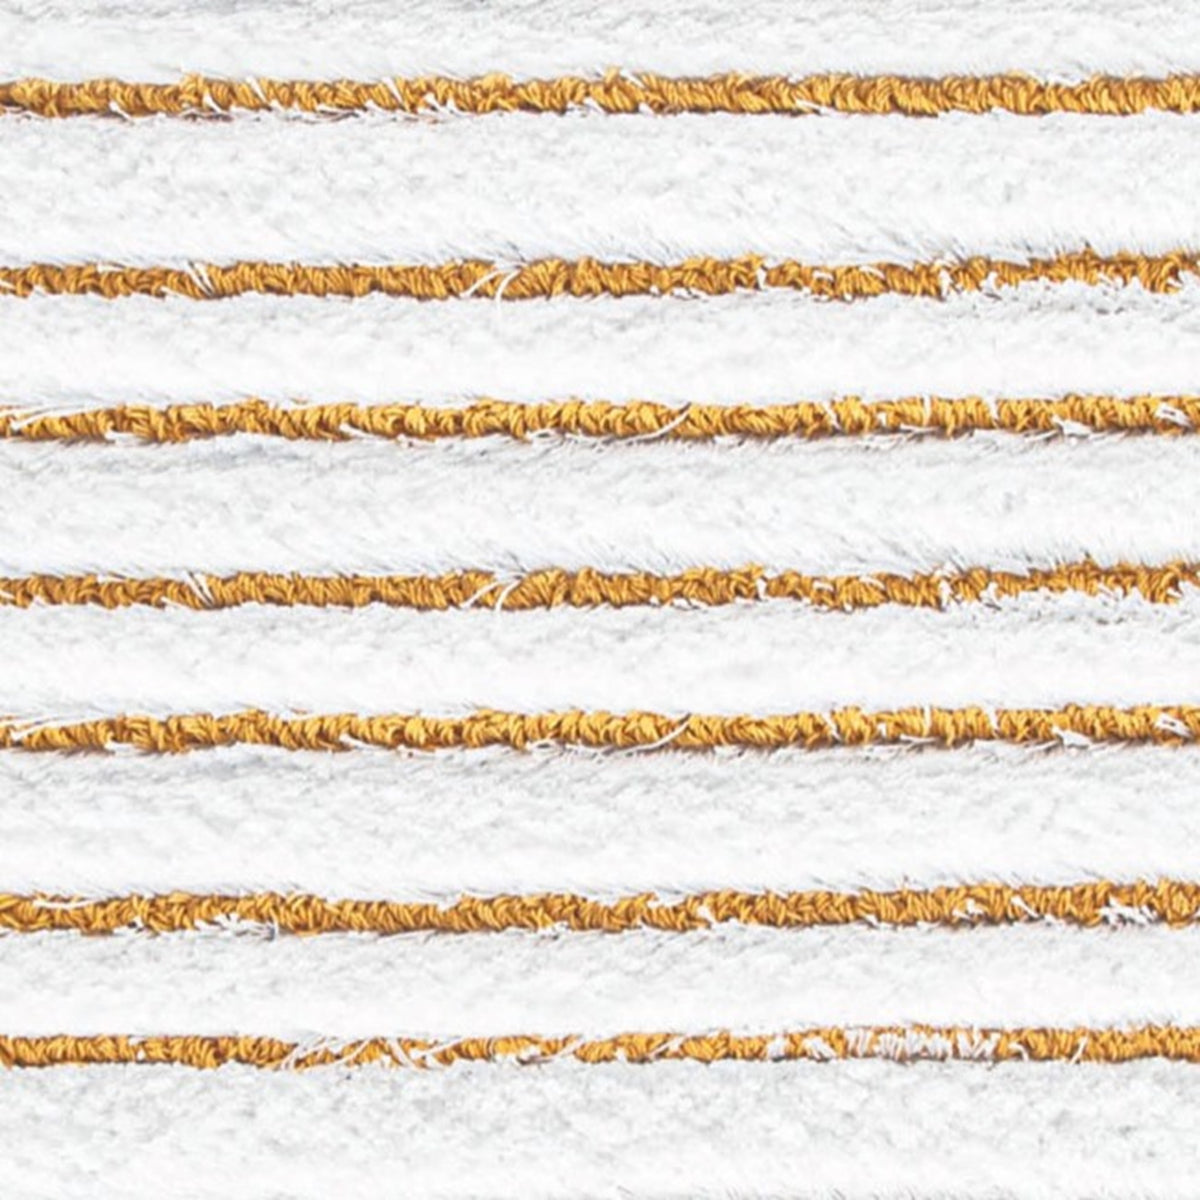 Swatch Sample of Graccioza Taormina Bath Rugs in Gold Color